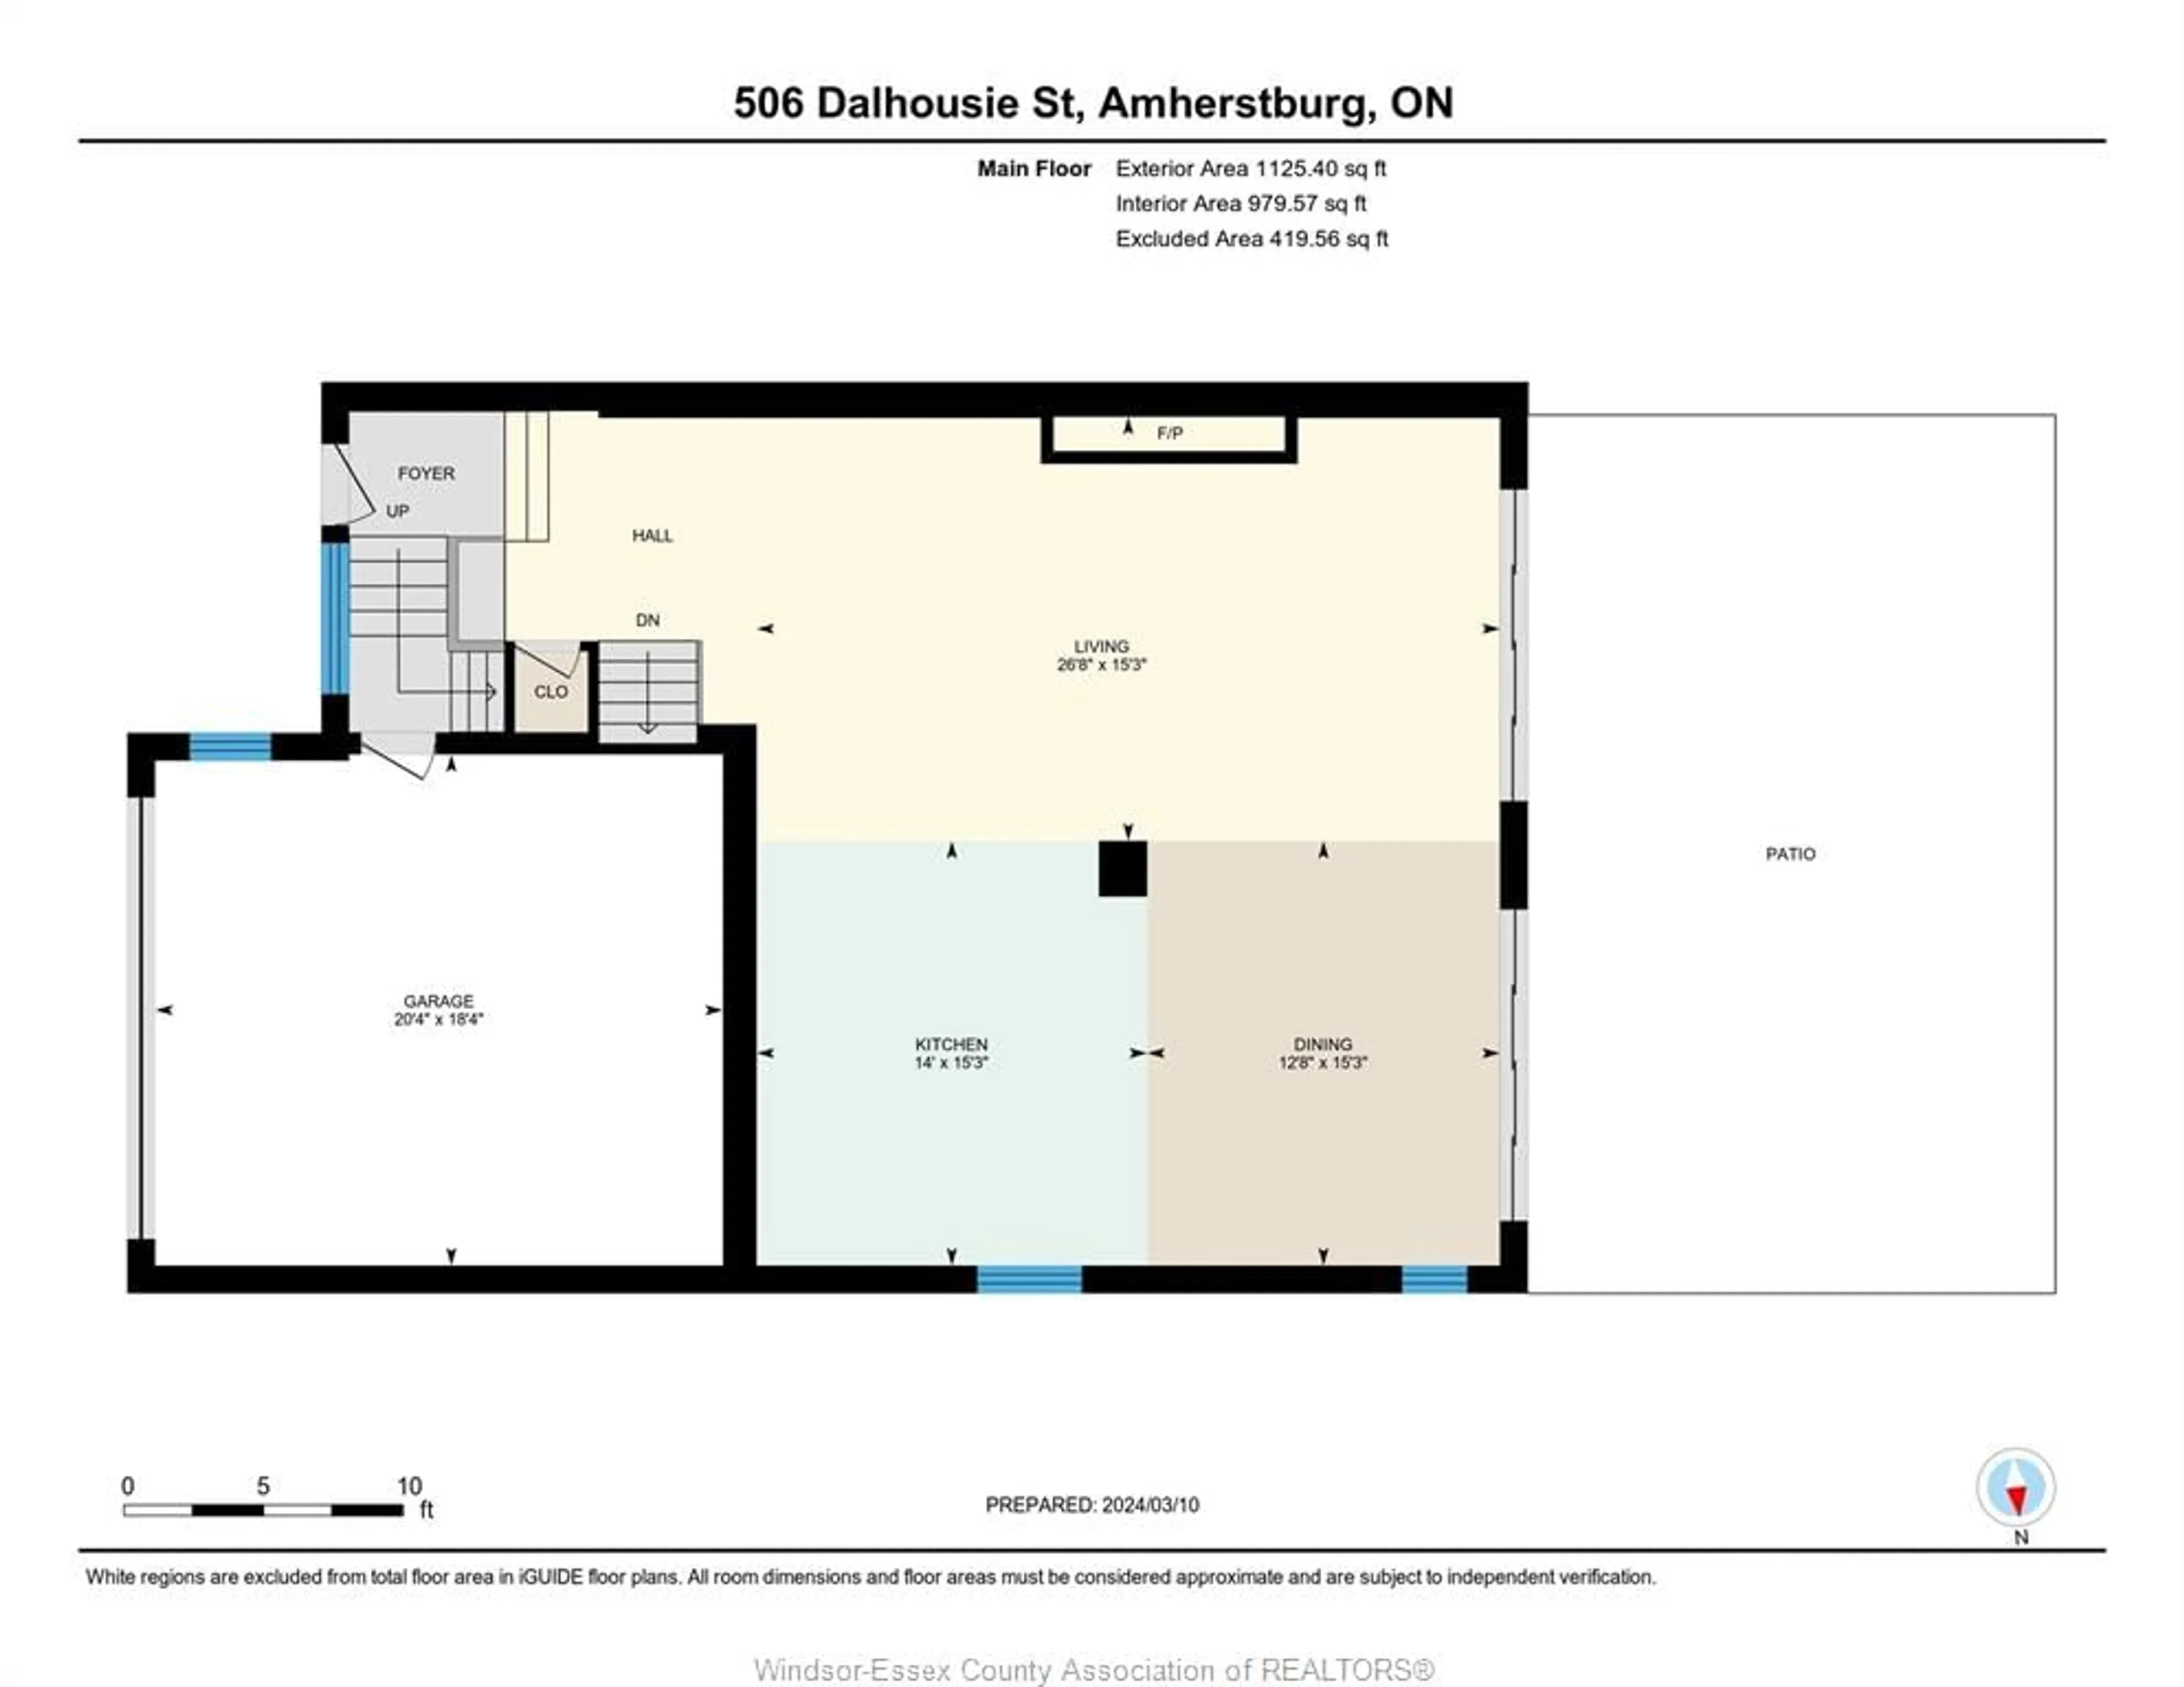 Floor plan for 506 Dalhousie, Amherstburg Ontario N9V 2M3